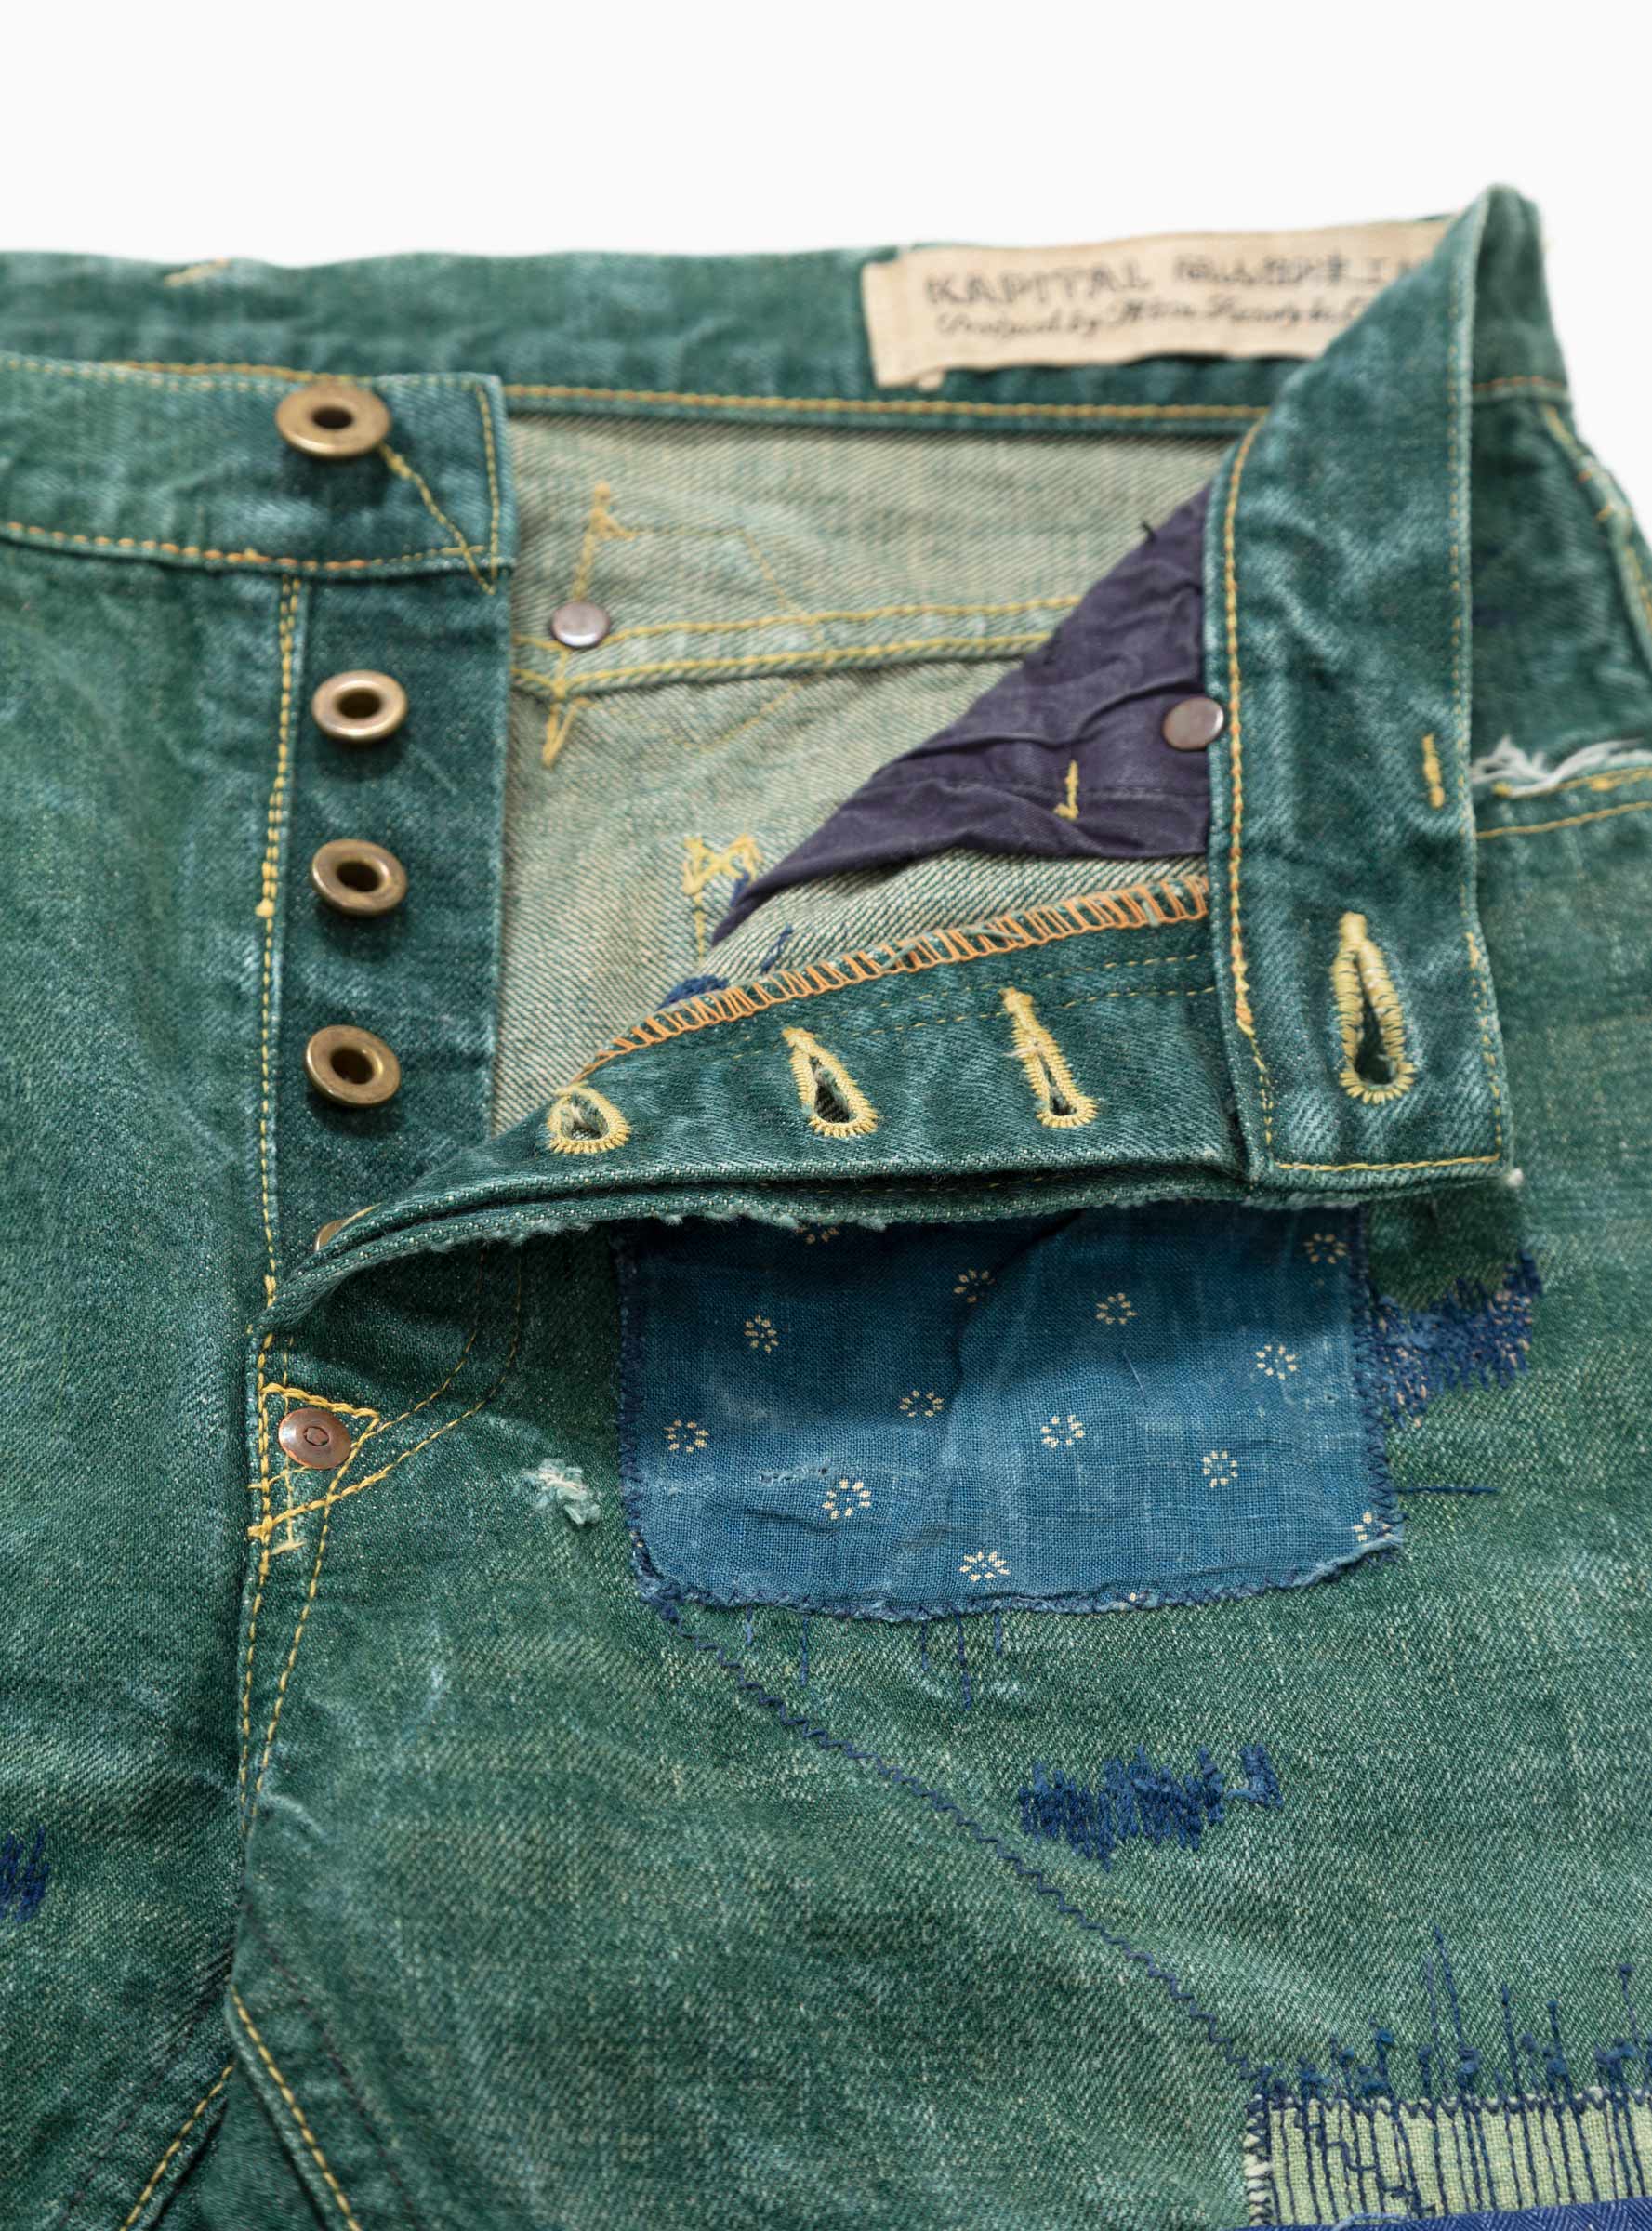 Kapital Kountry No.4 Indigo Patchwork Jeans by Selector's Market ...